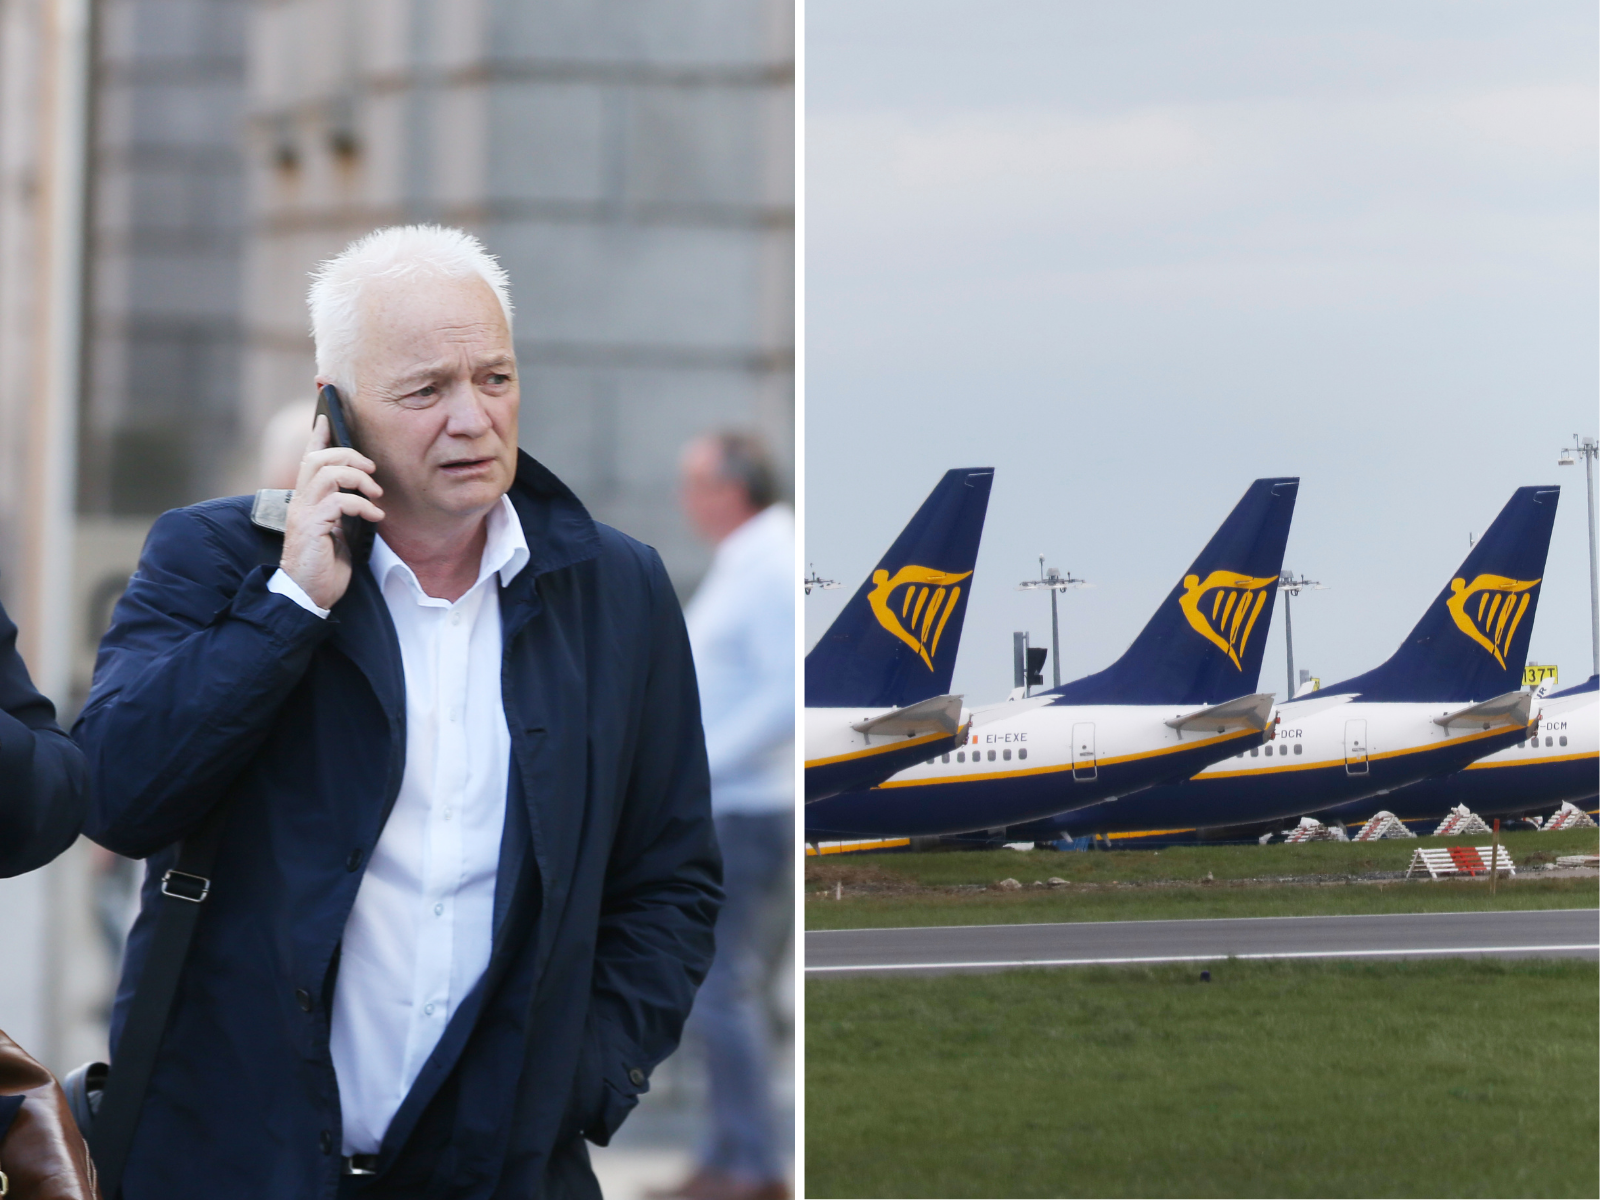 Split-screen image of Eddie Wilson (left) and Ryanair planes (right)